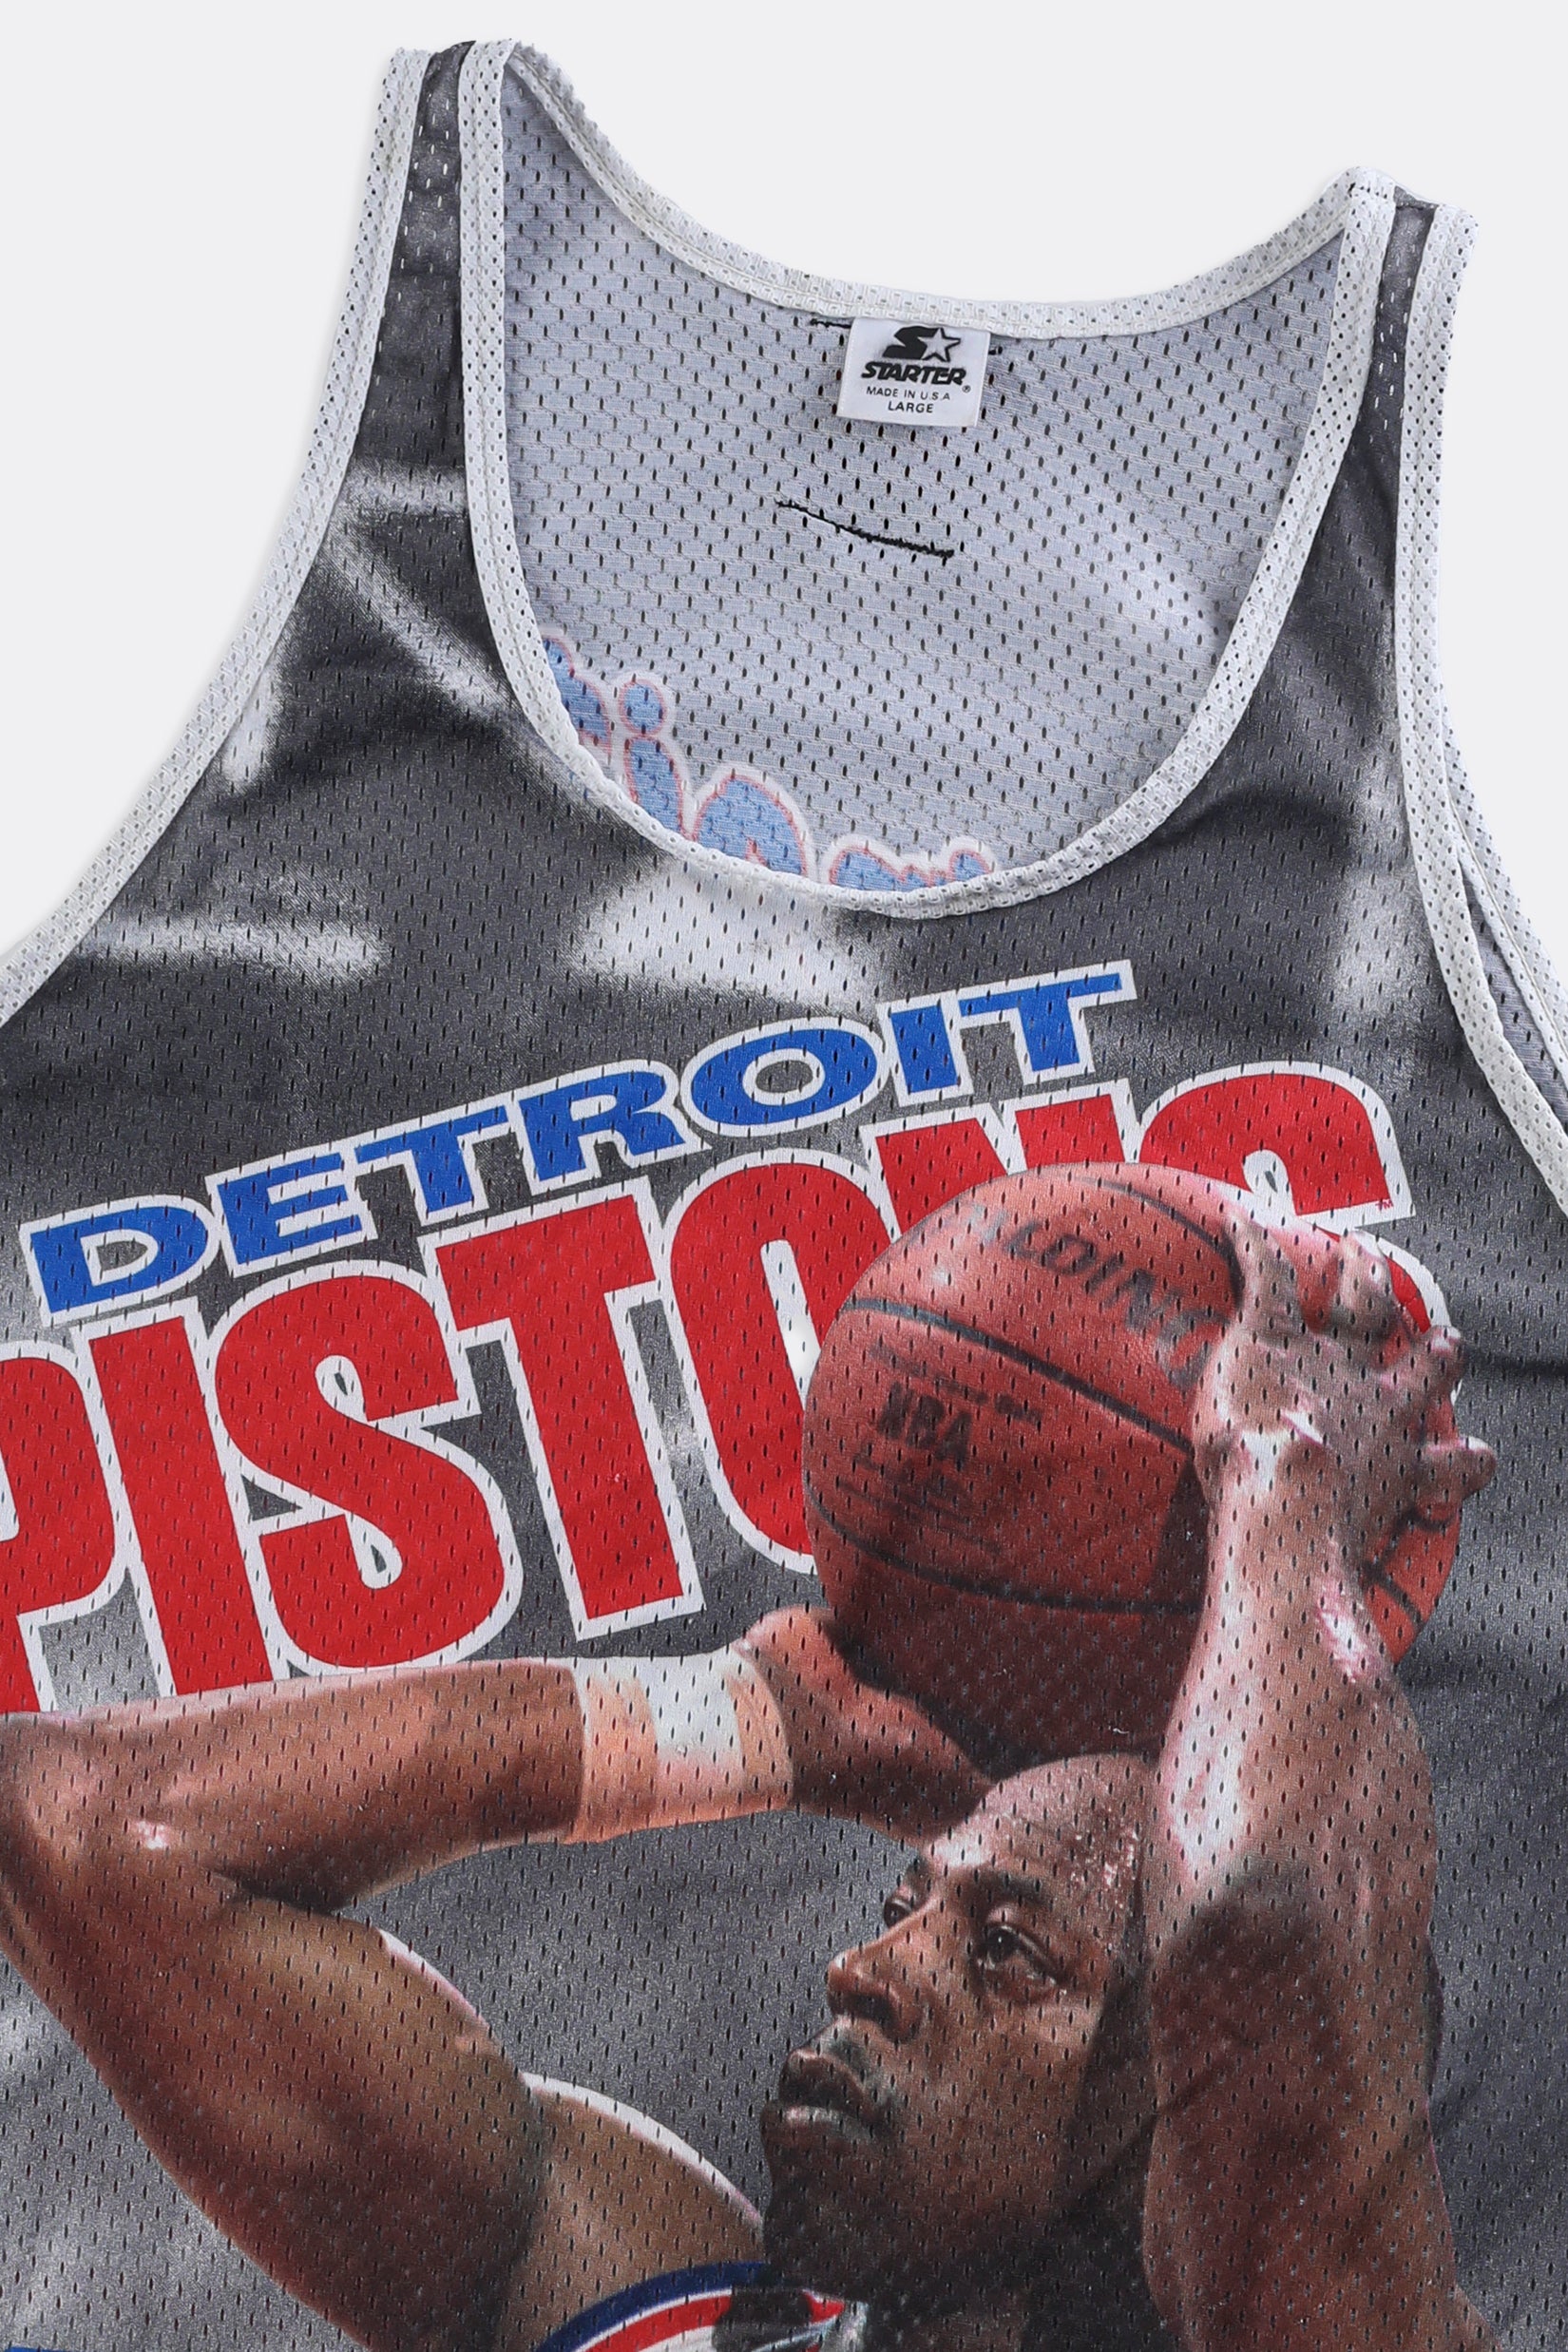 Detroit Pistons NBA Jerseys, Detroit Pistons Basketball Jerseys